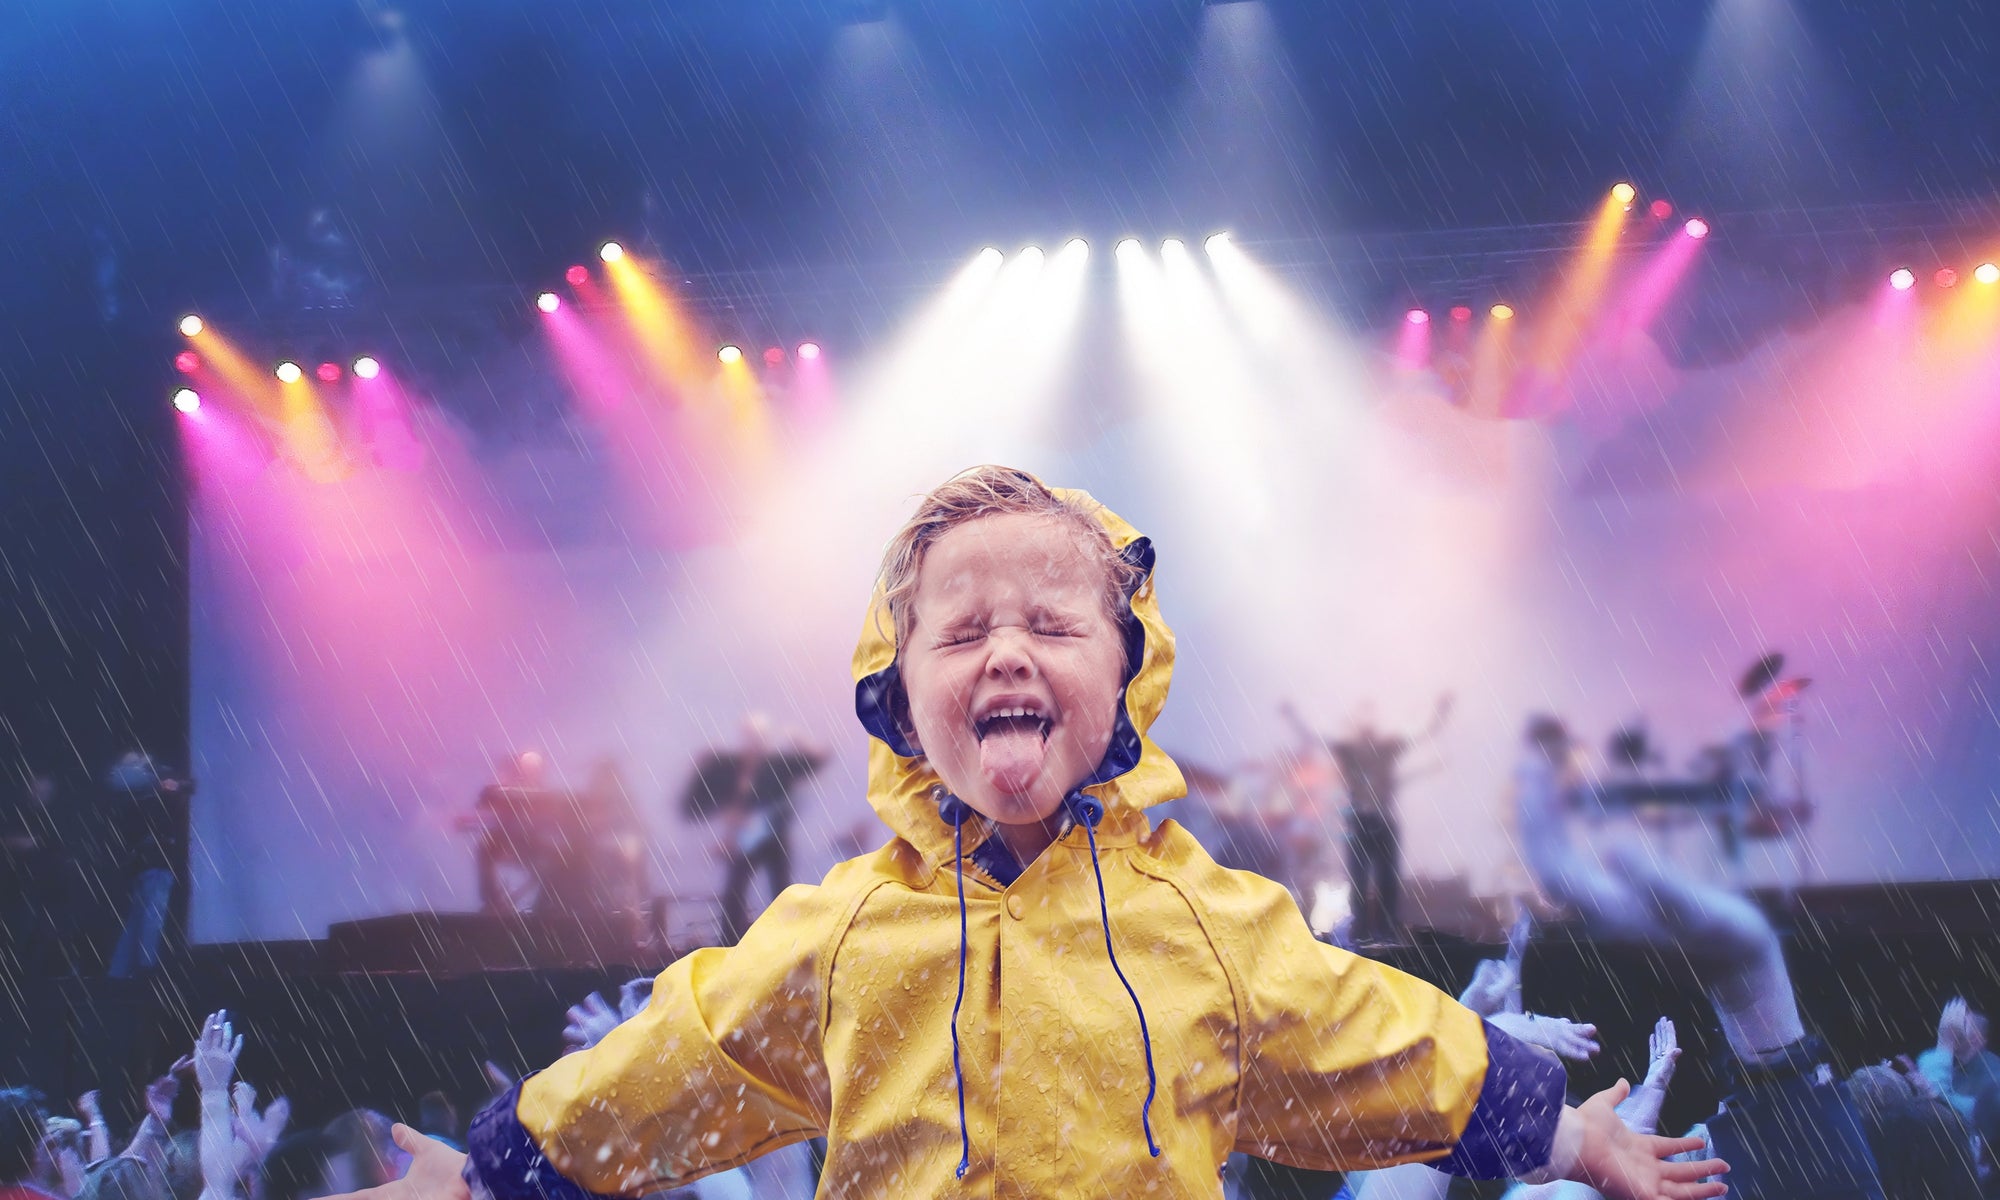 Cheerful boy wearing raincoat enjoying in rain  at music concert